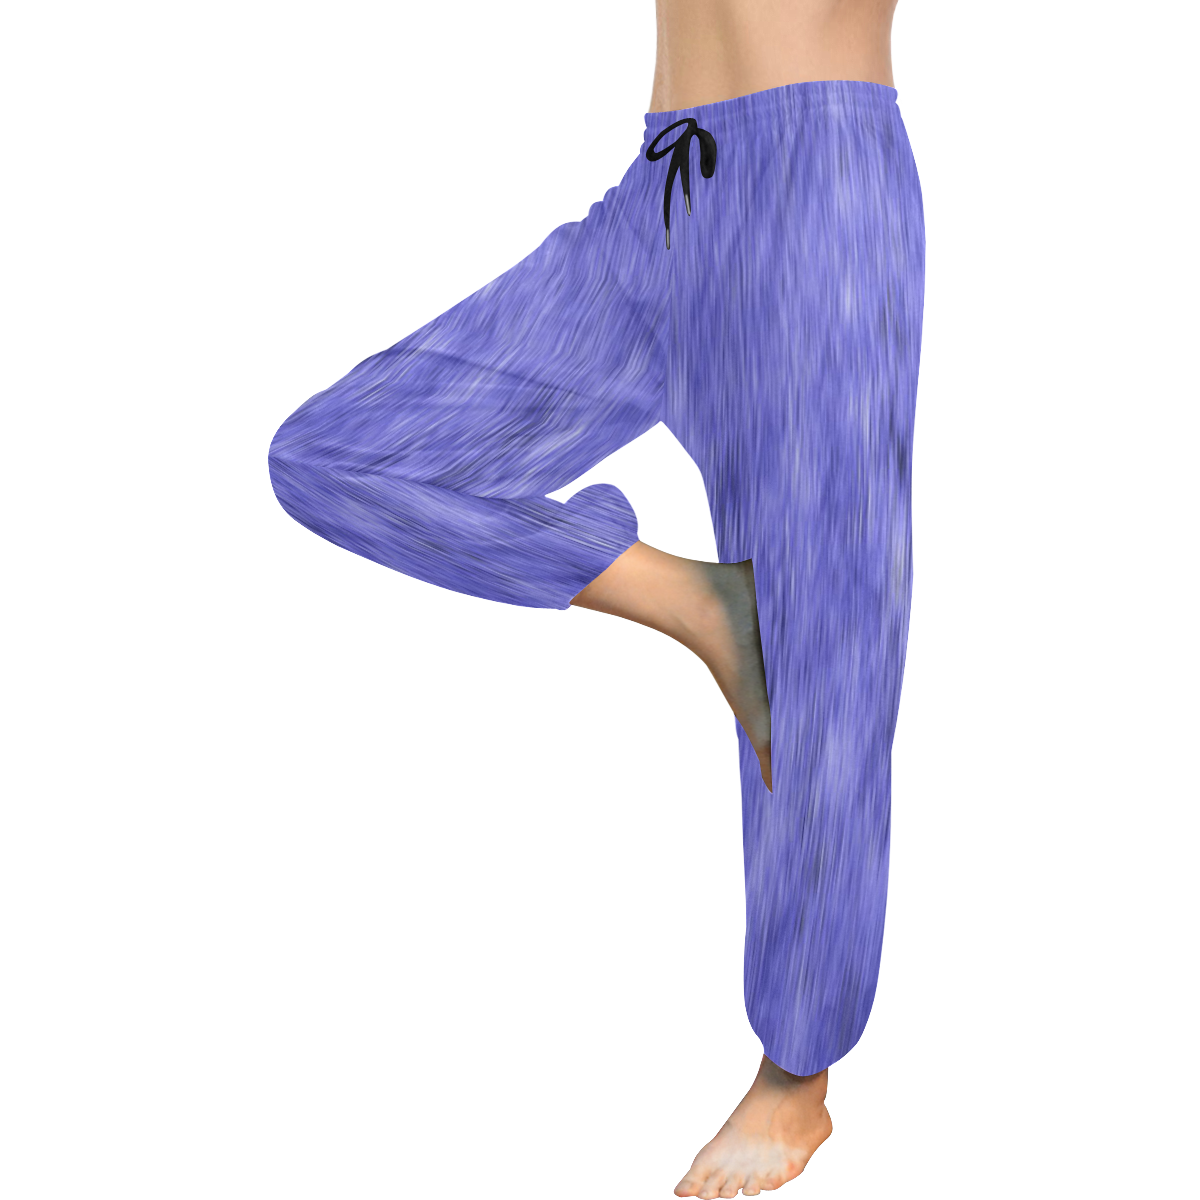 Purple and Lavender Ombre Bohemian Pants Women's All Over Print Harem Pants (Model L18)